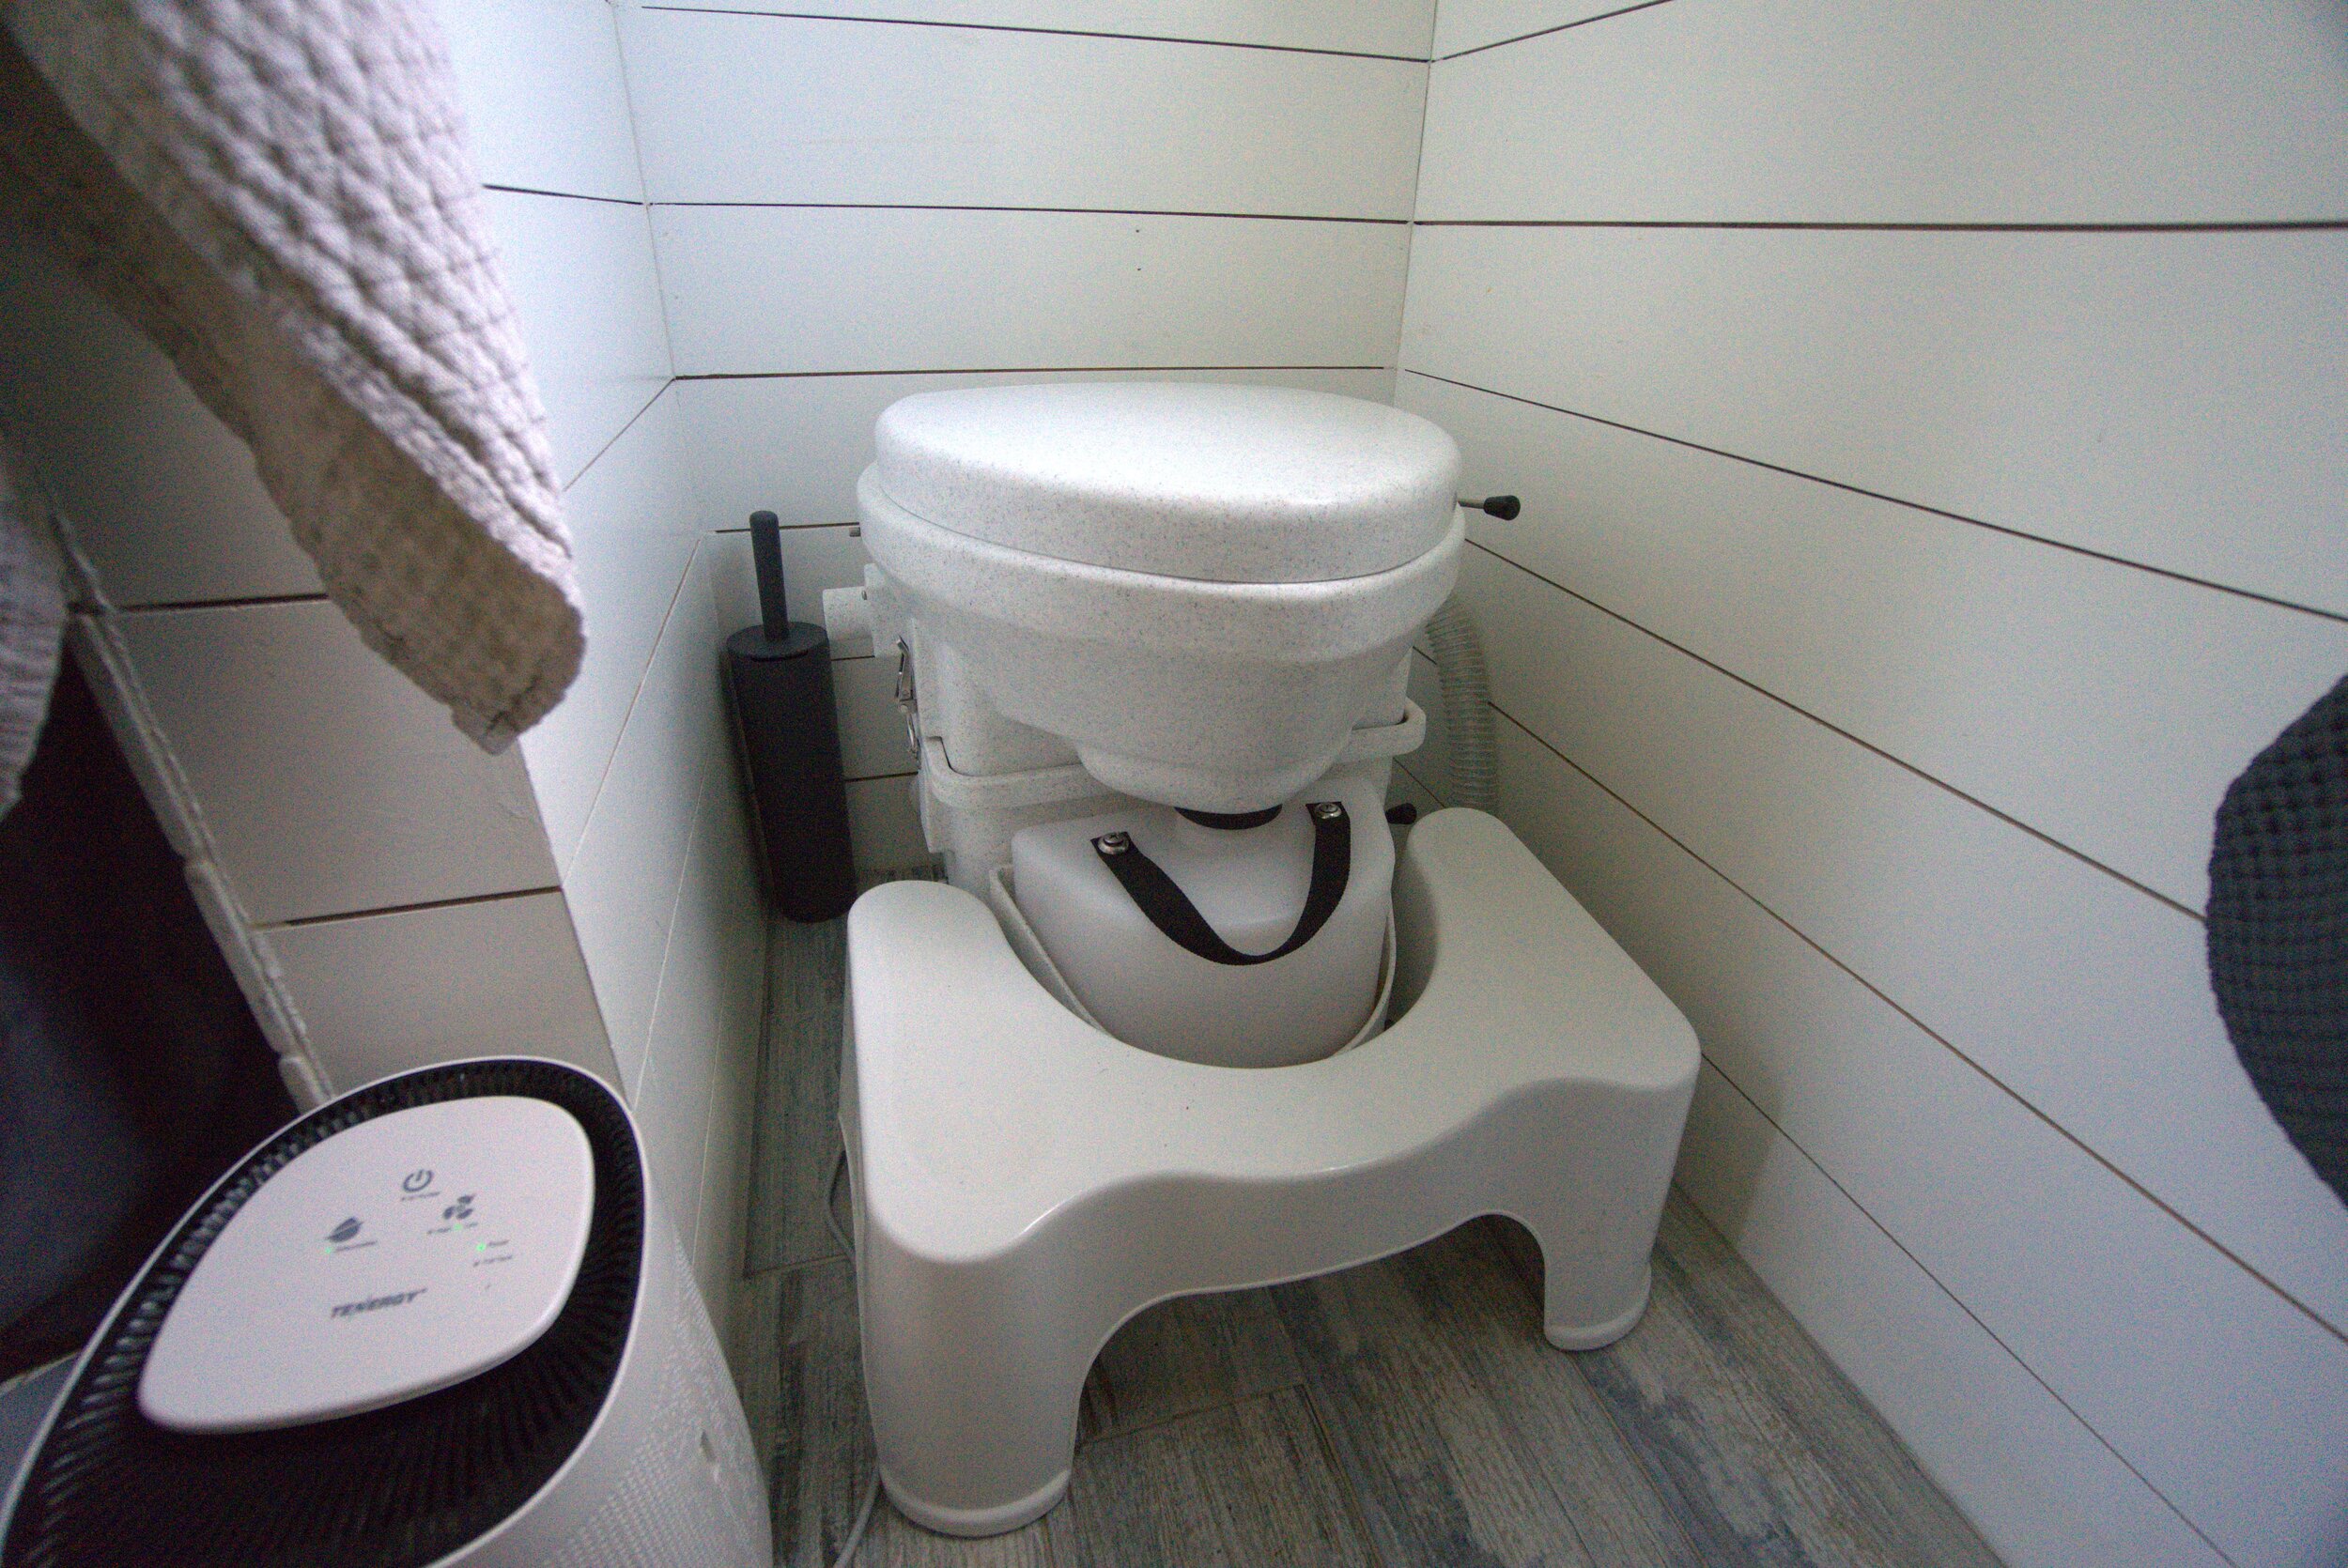 https://images.squarespace-cdn.com/content/v1/58f66d65d2b857107df1a49e/1602381396628-P5KWQ73C9YEPR3B0OQ5N/compost+toilet+tiny+house++best+compost+toilet+for+tiny+house++diy+composting+toilet+tiny+house